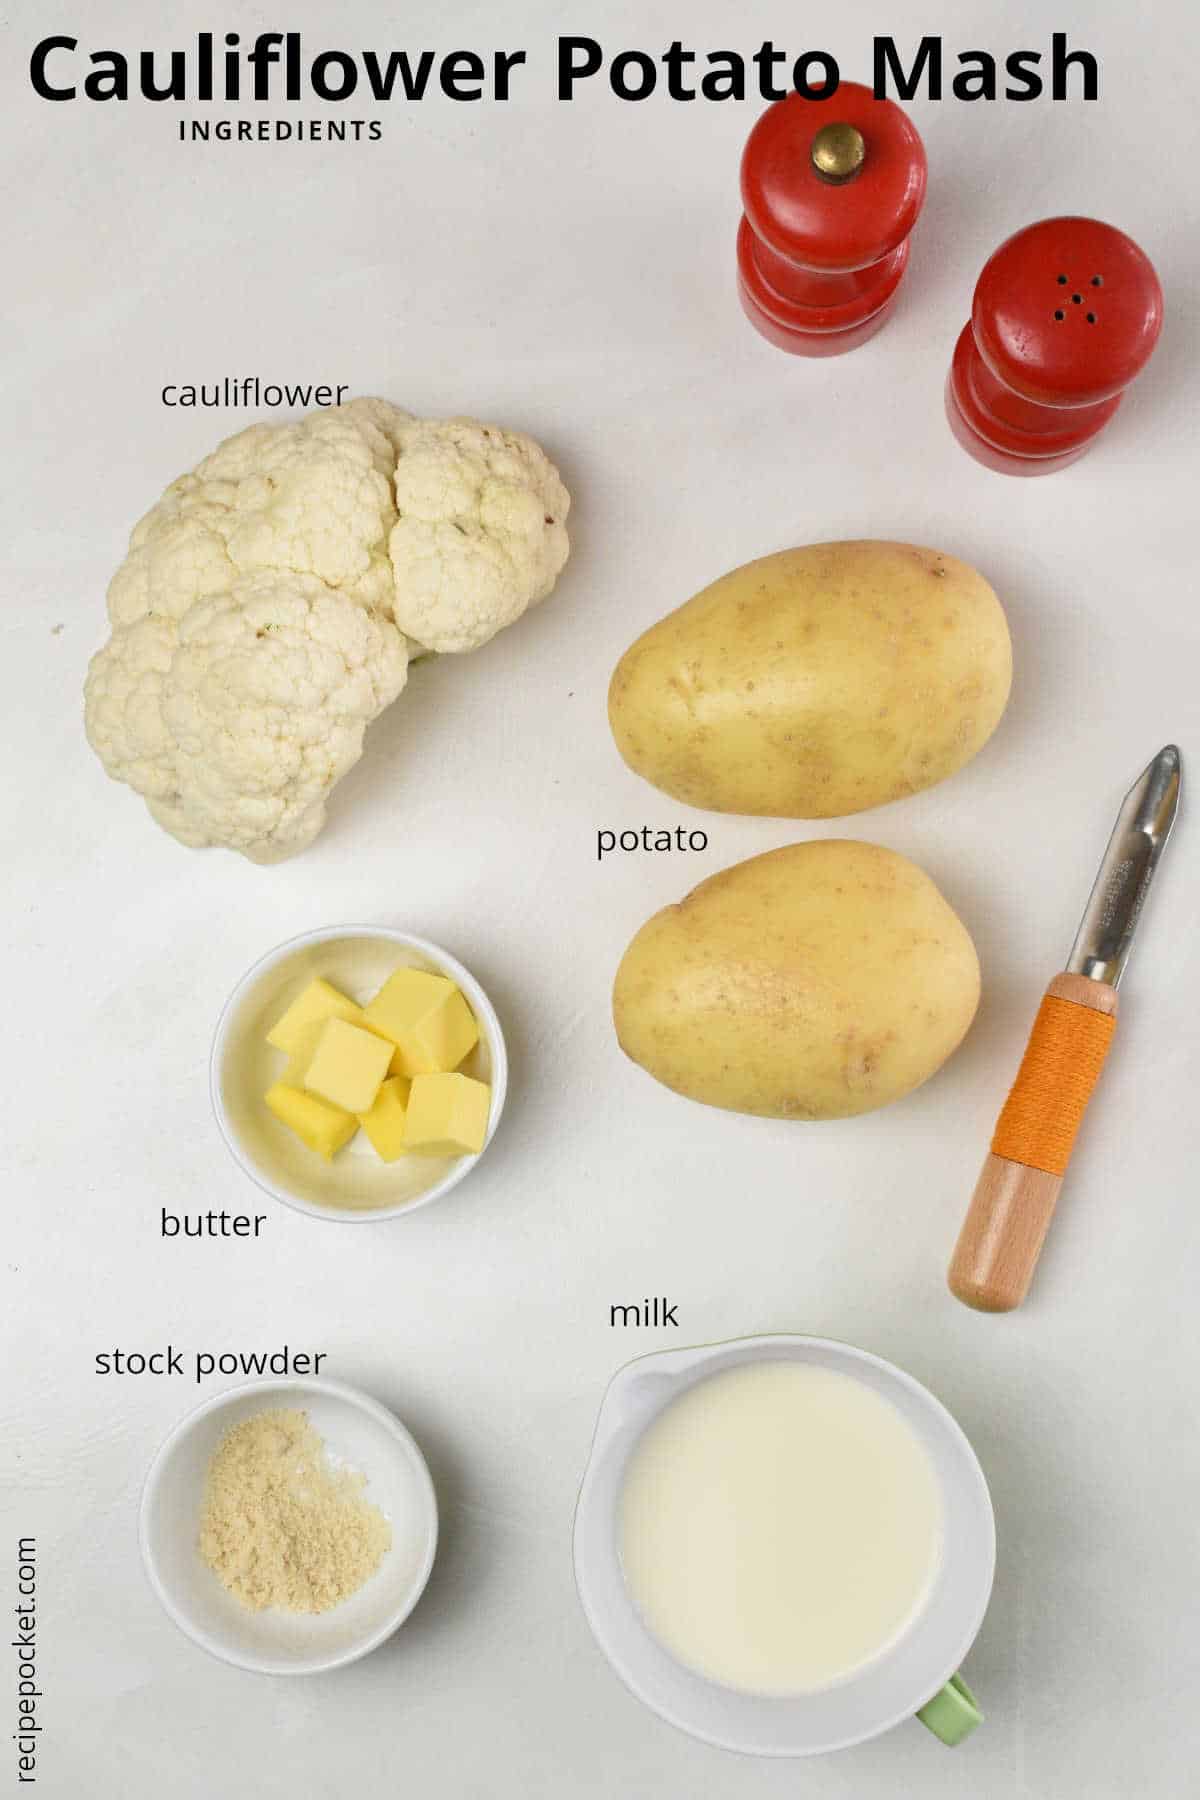 Image showing ingredients for cauliflower mashed potatoes.